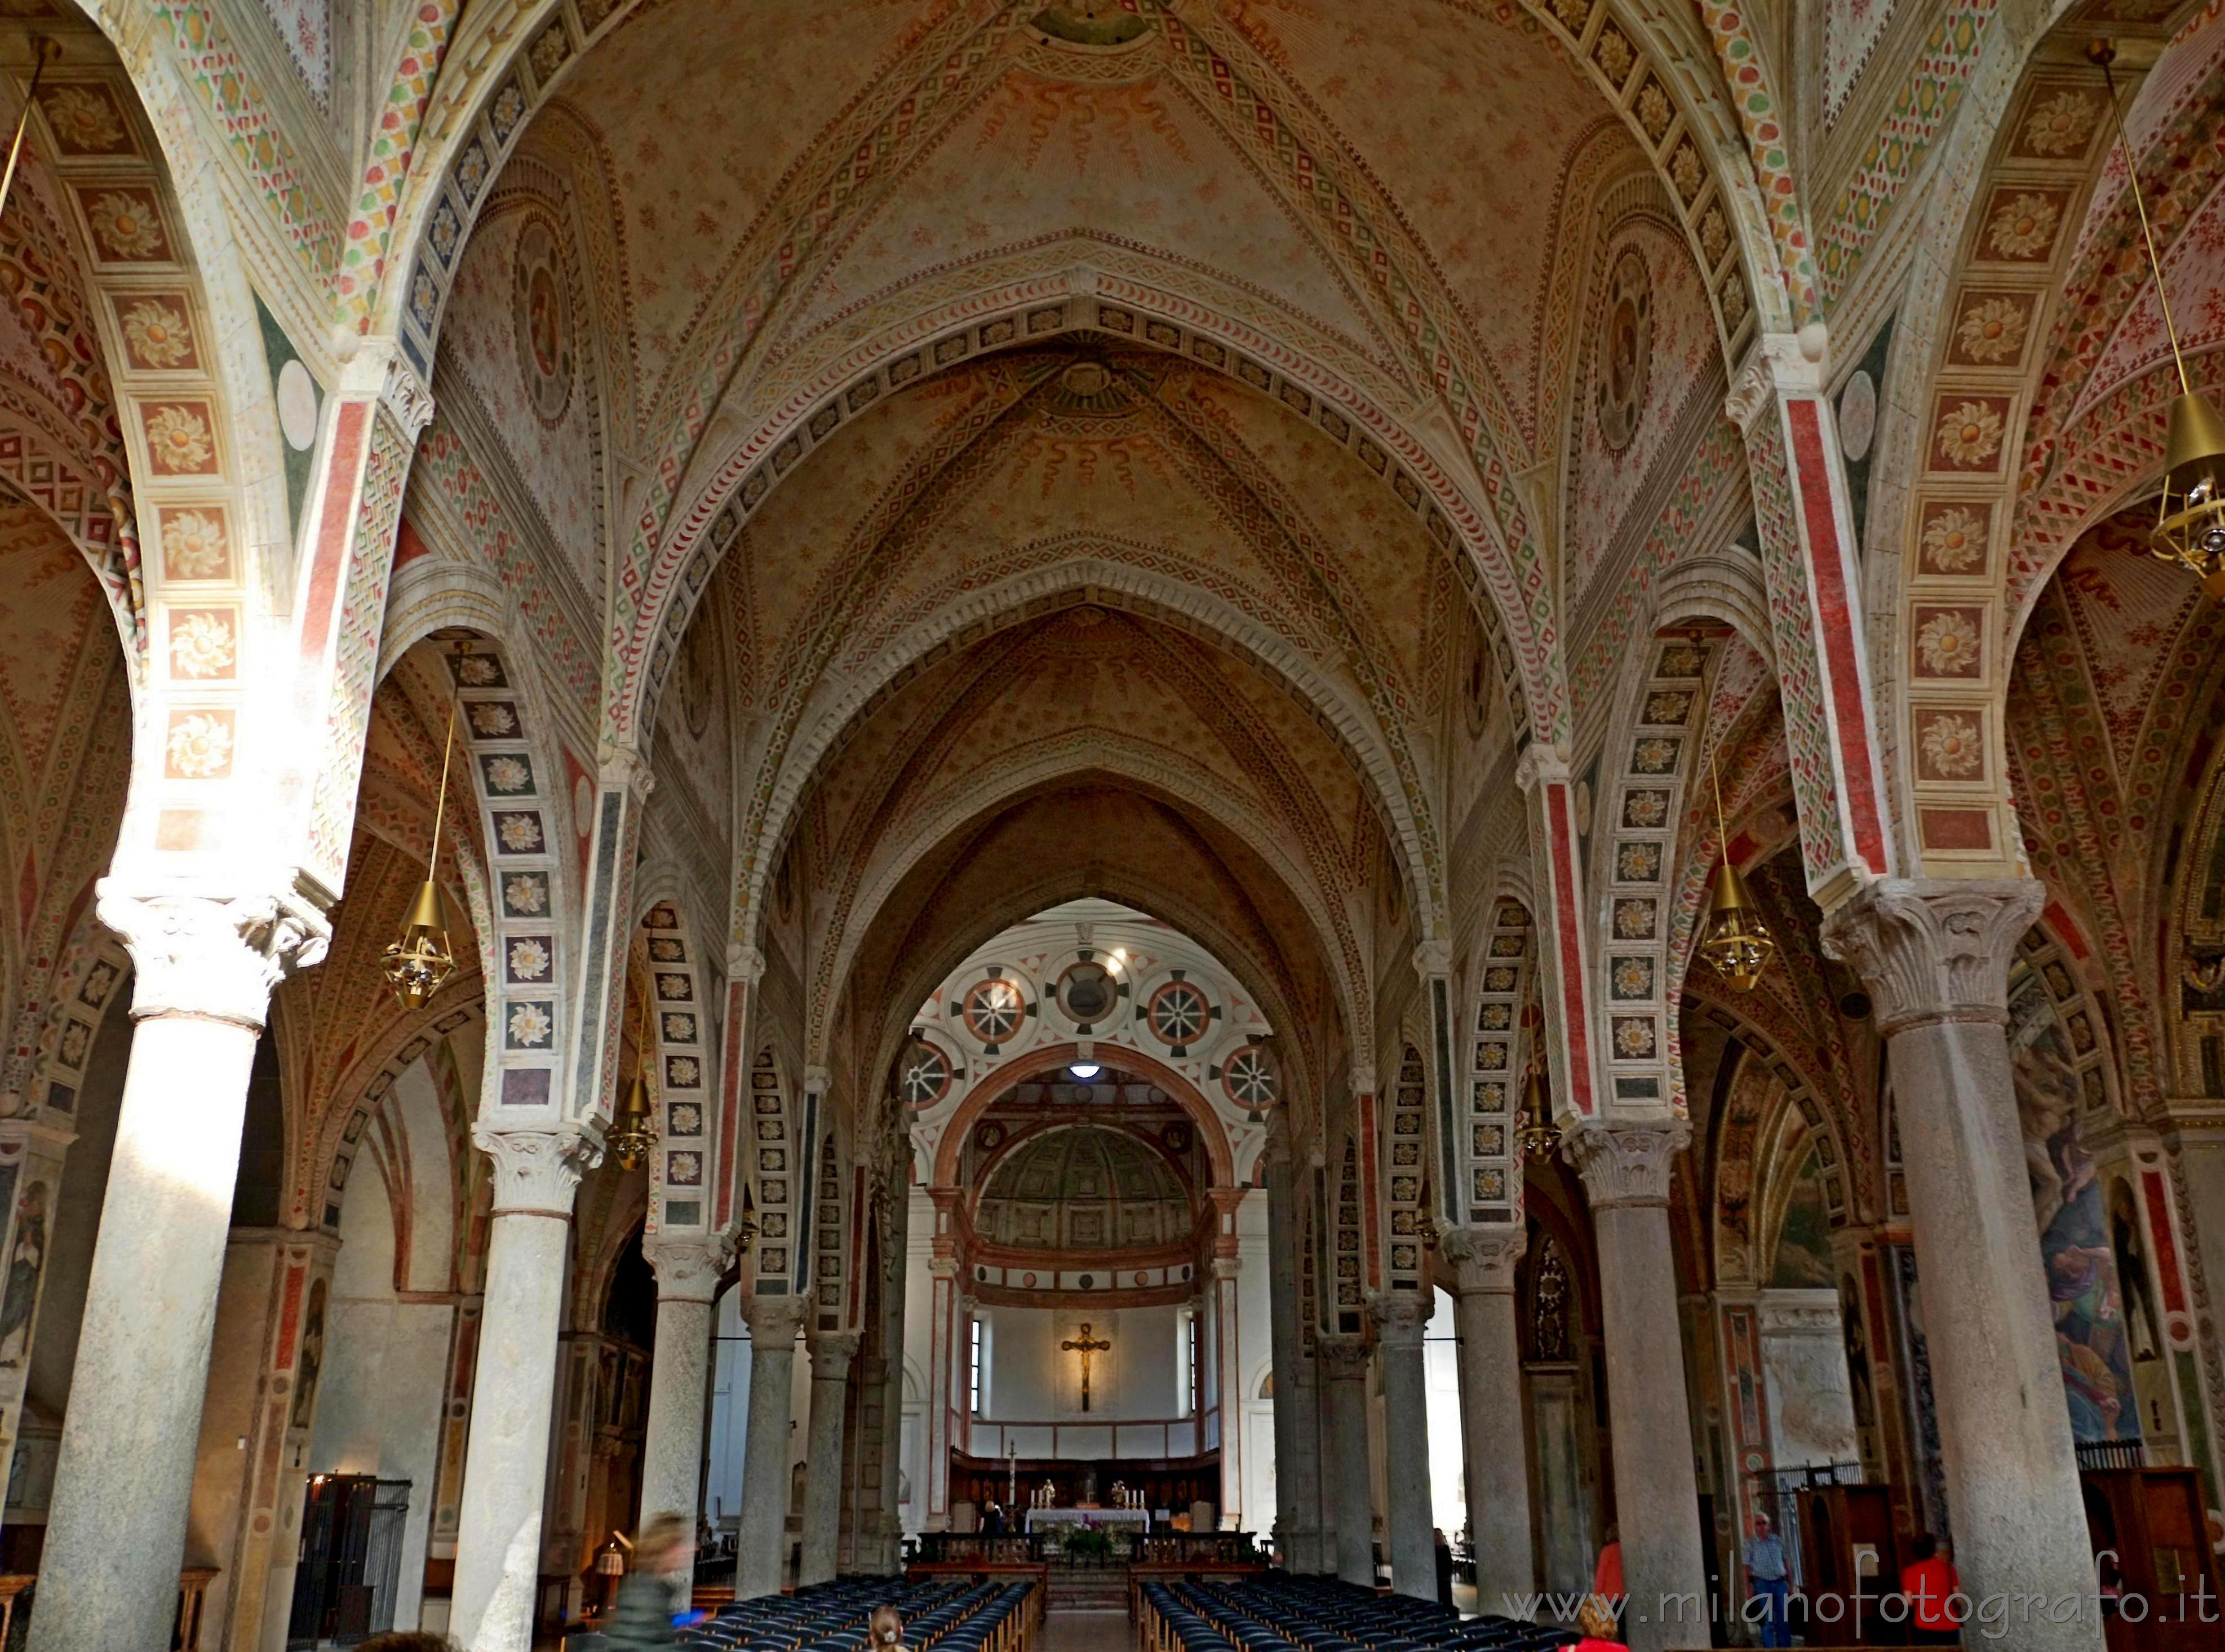 Milan (Italy): Central nave of Santa Maria delle Grazie - Milan (Italy)